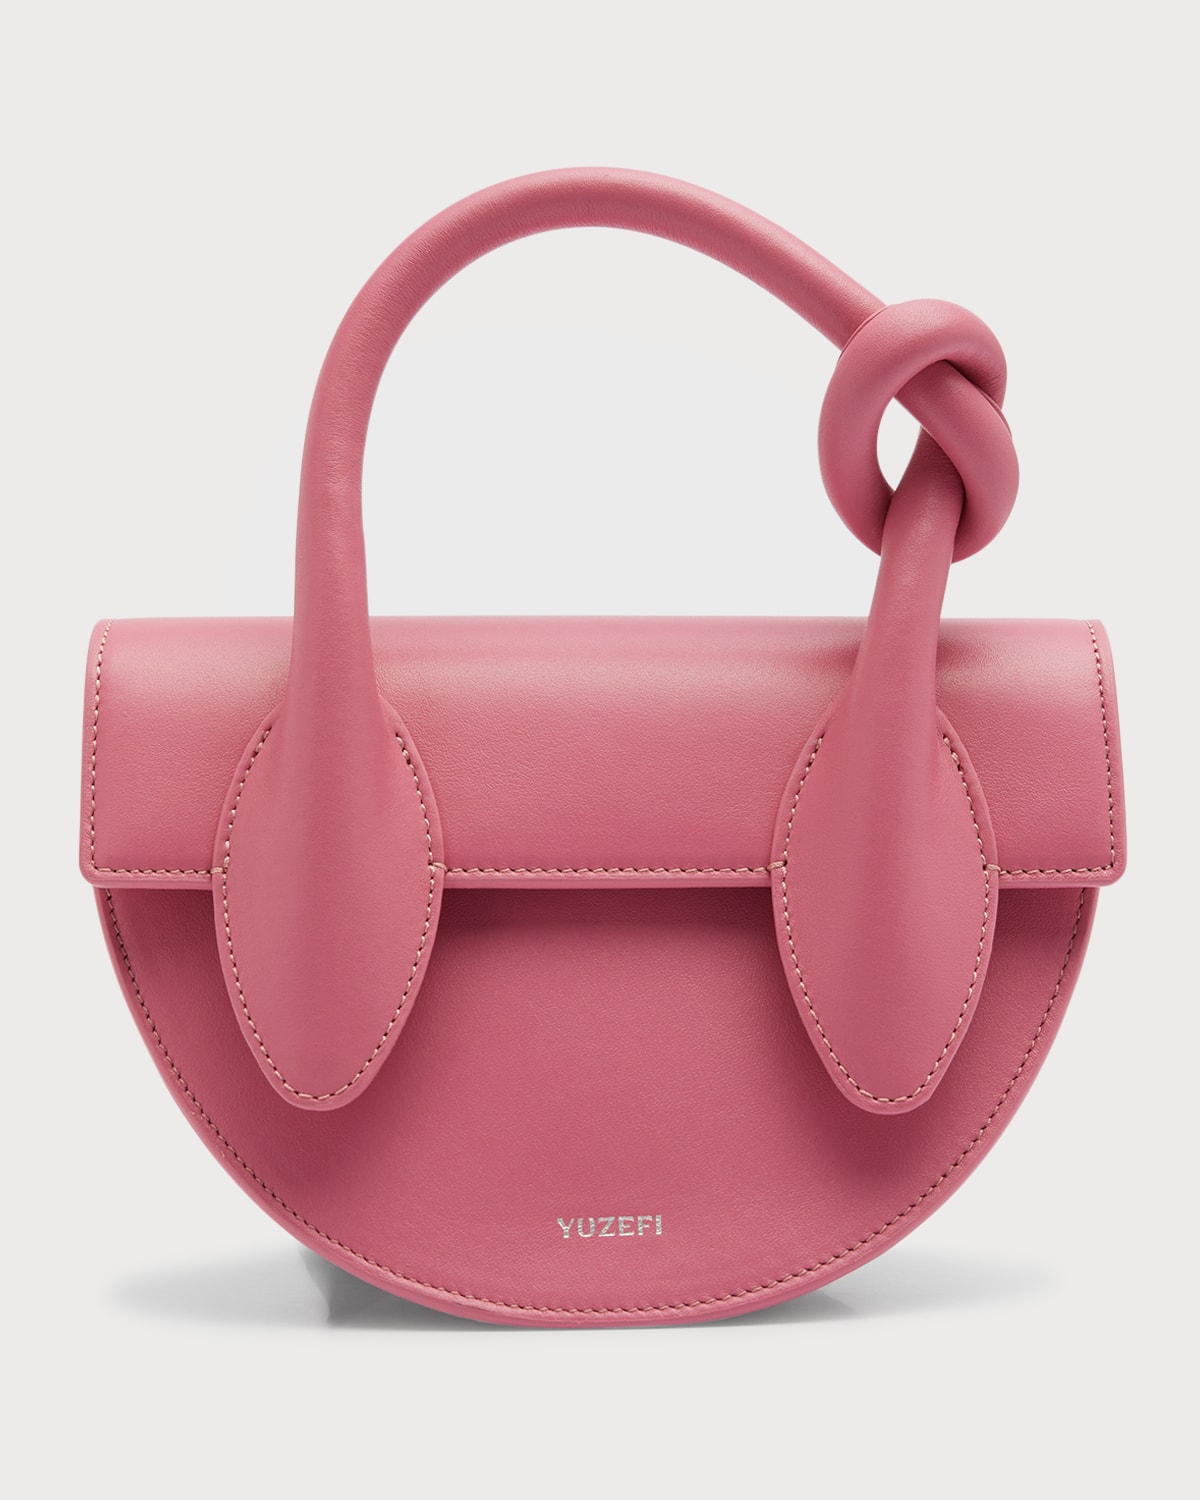 Yuzefi Pretzel Leather Top-Handle Bag